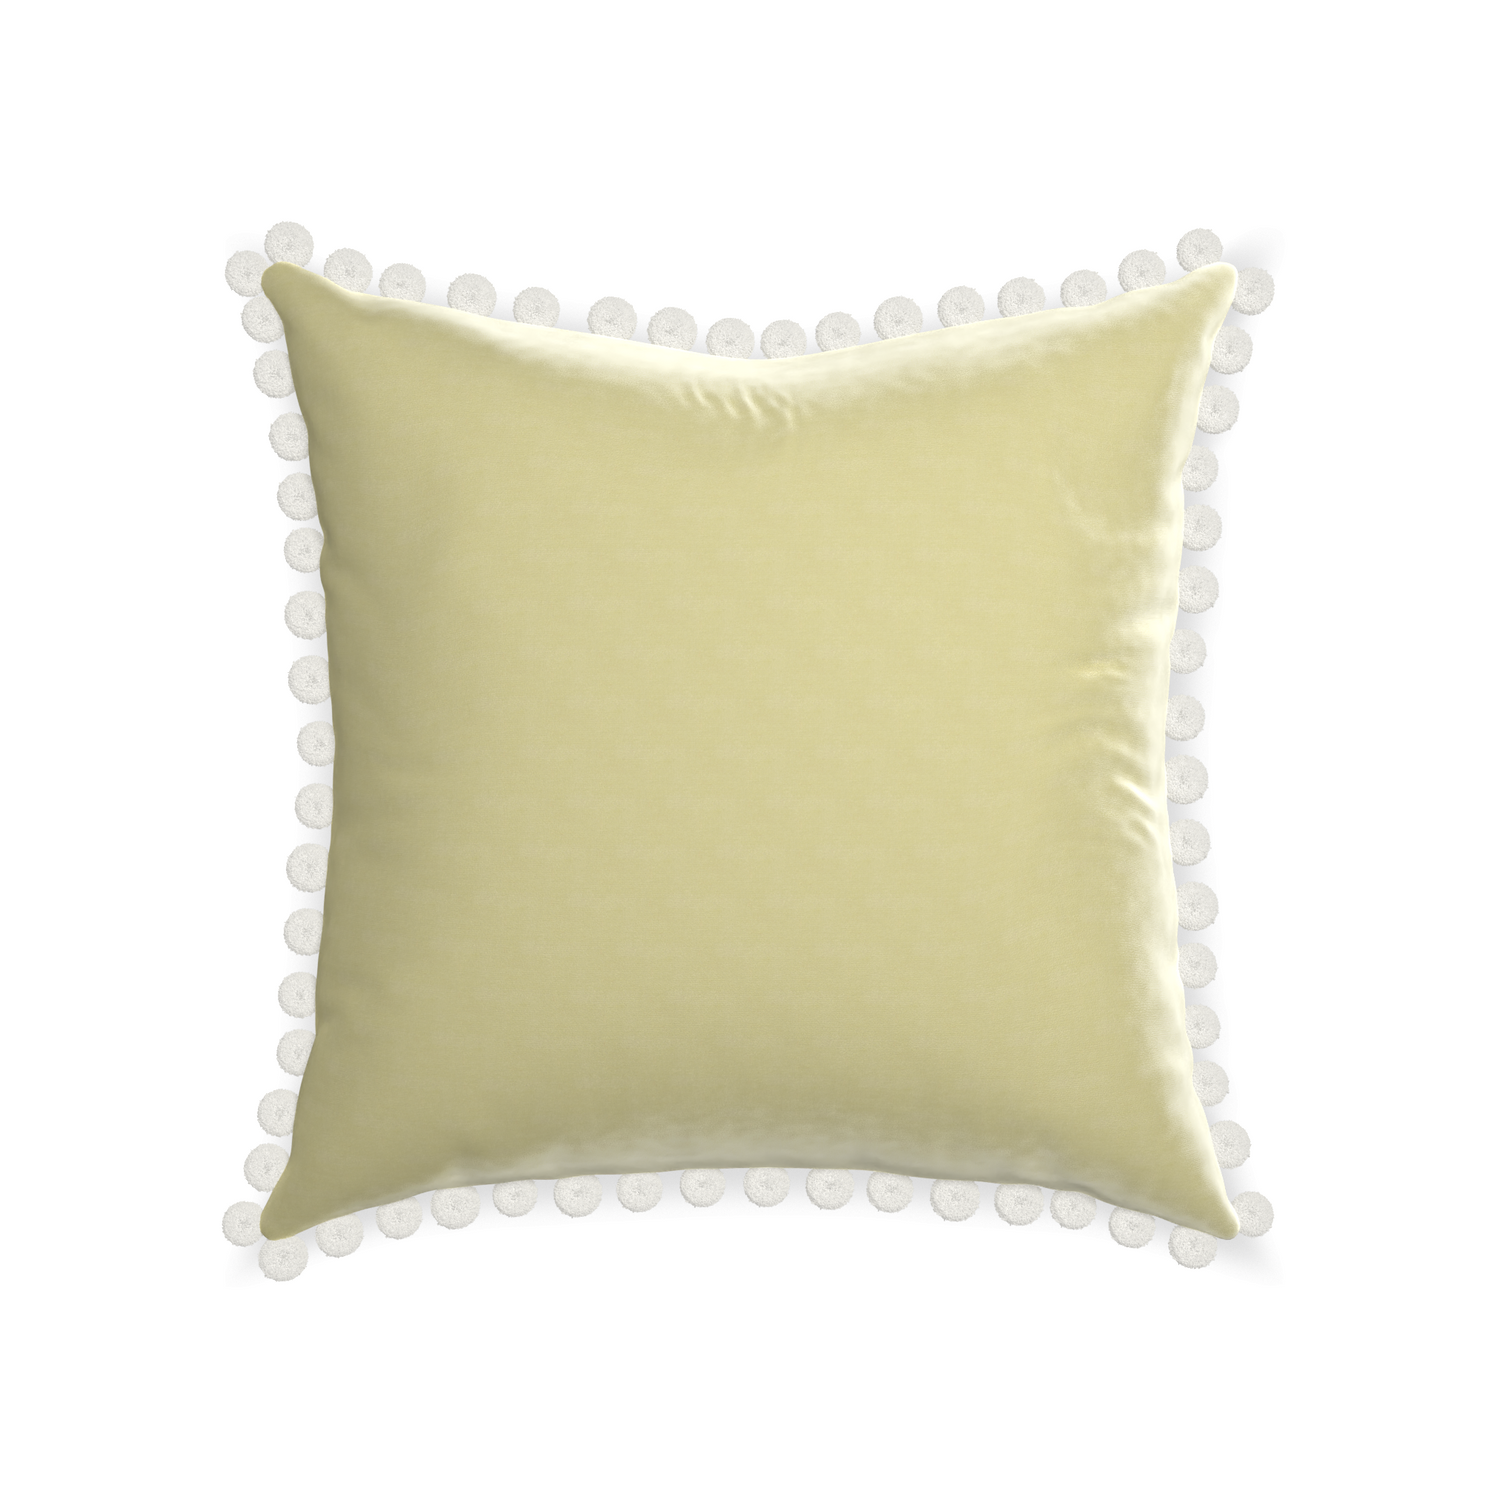 square light green pillow with white pom poms